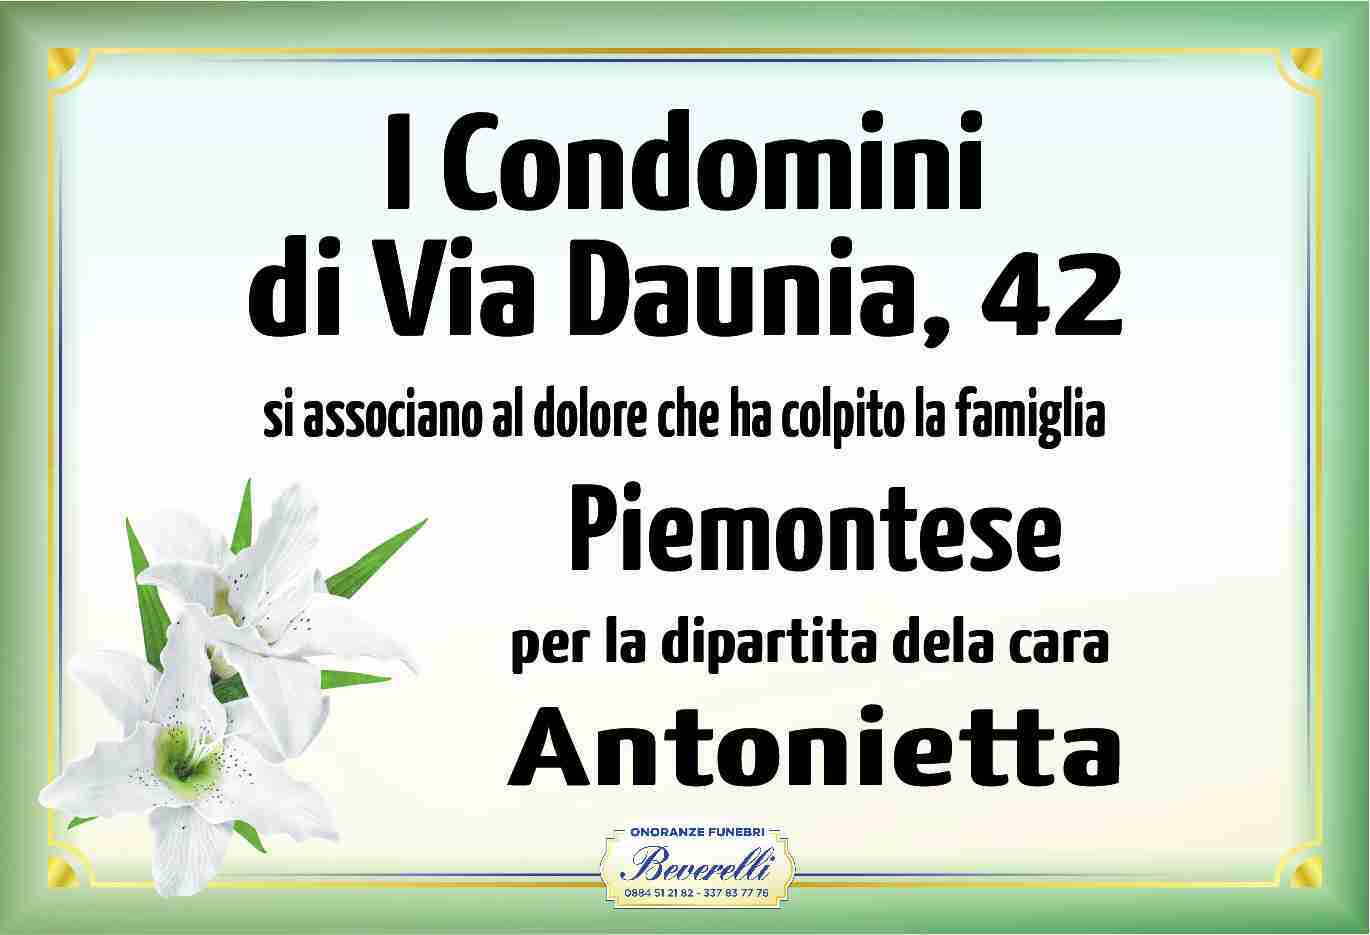 Antonietta Piemontese